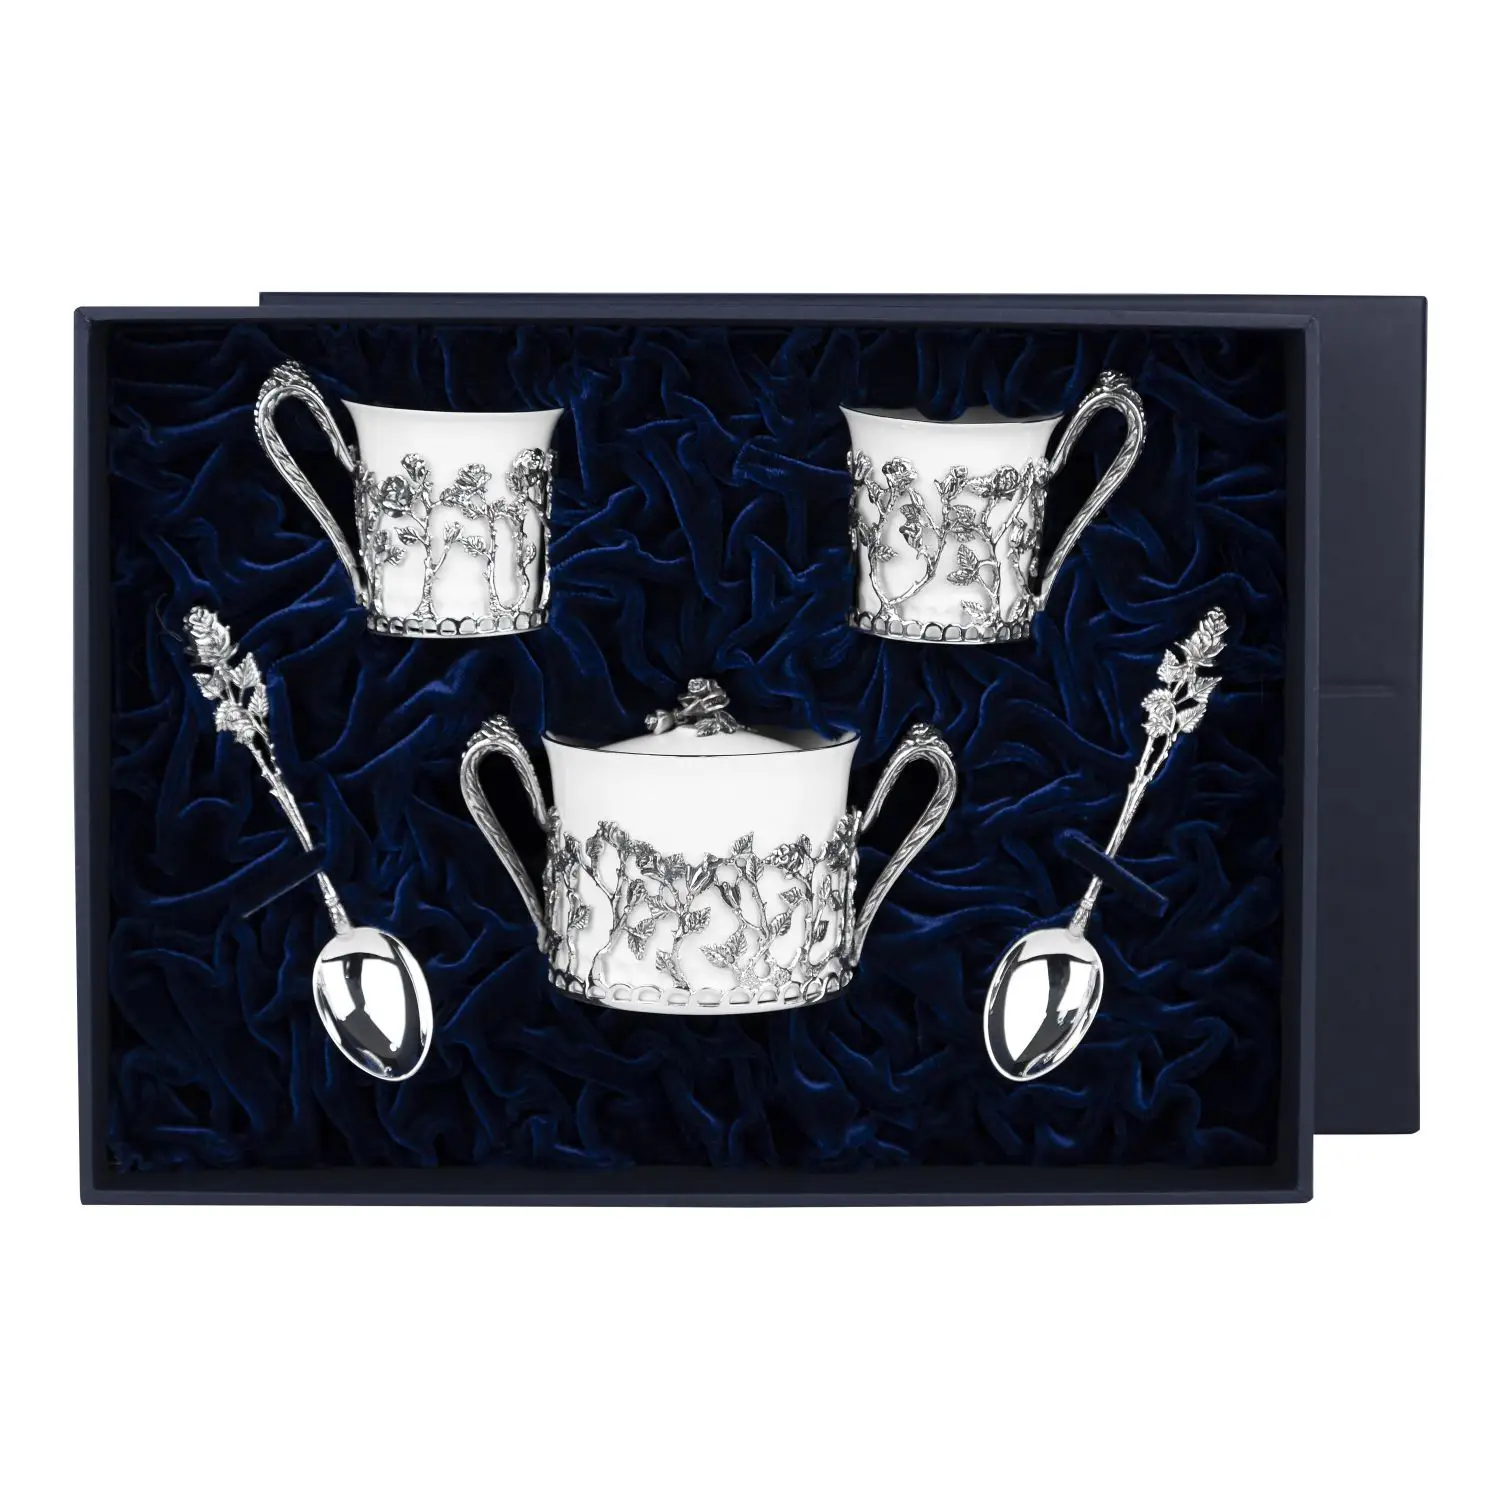 Набор Розалия : ложка, чашка, сахарница (Серебро 925) набор королевская охота ложка чашка сахарница серебро 925